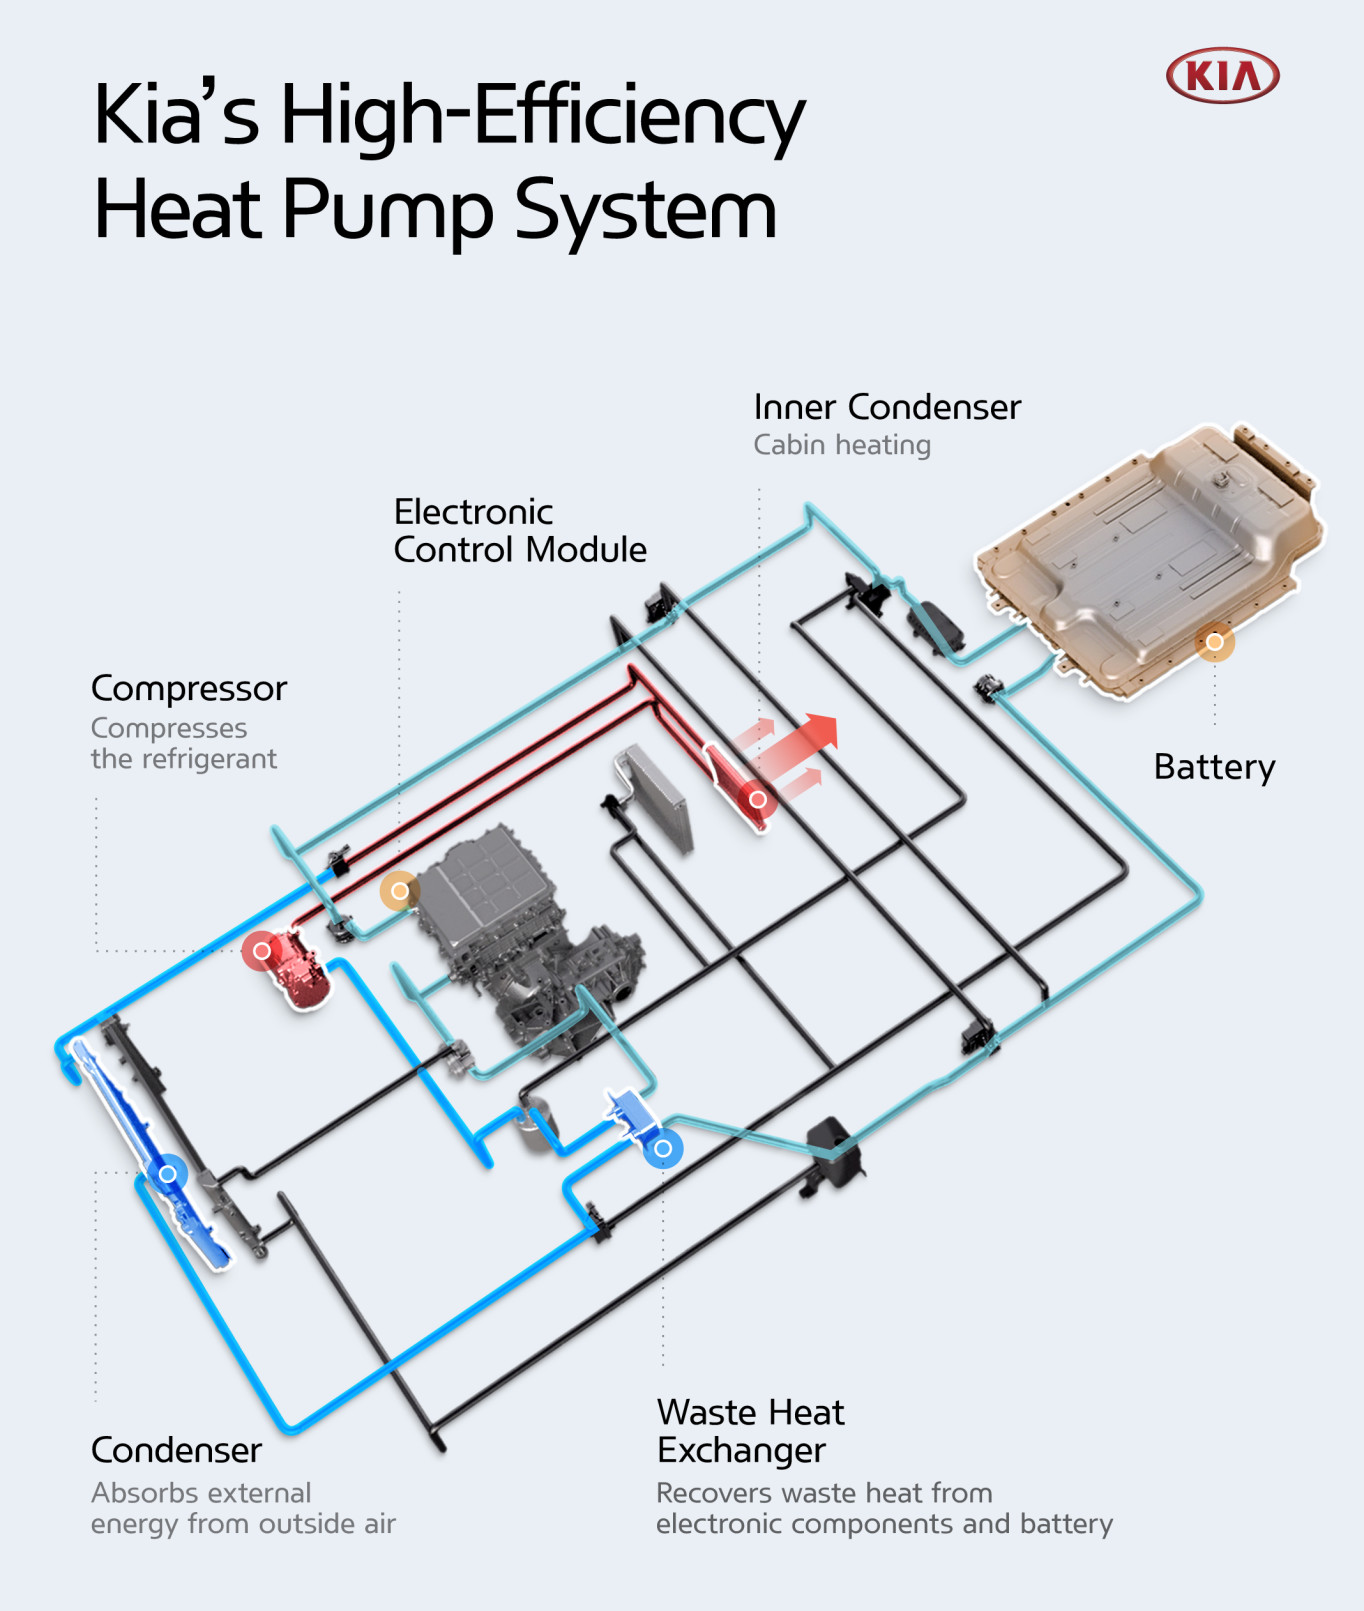 hyundai-kia-turn-up-ev-efficiency-with-new-heat-pump-technology